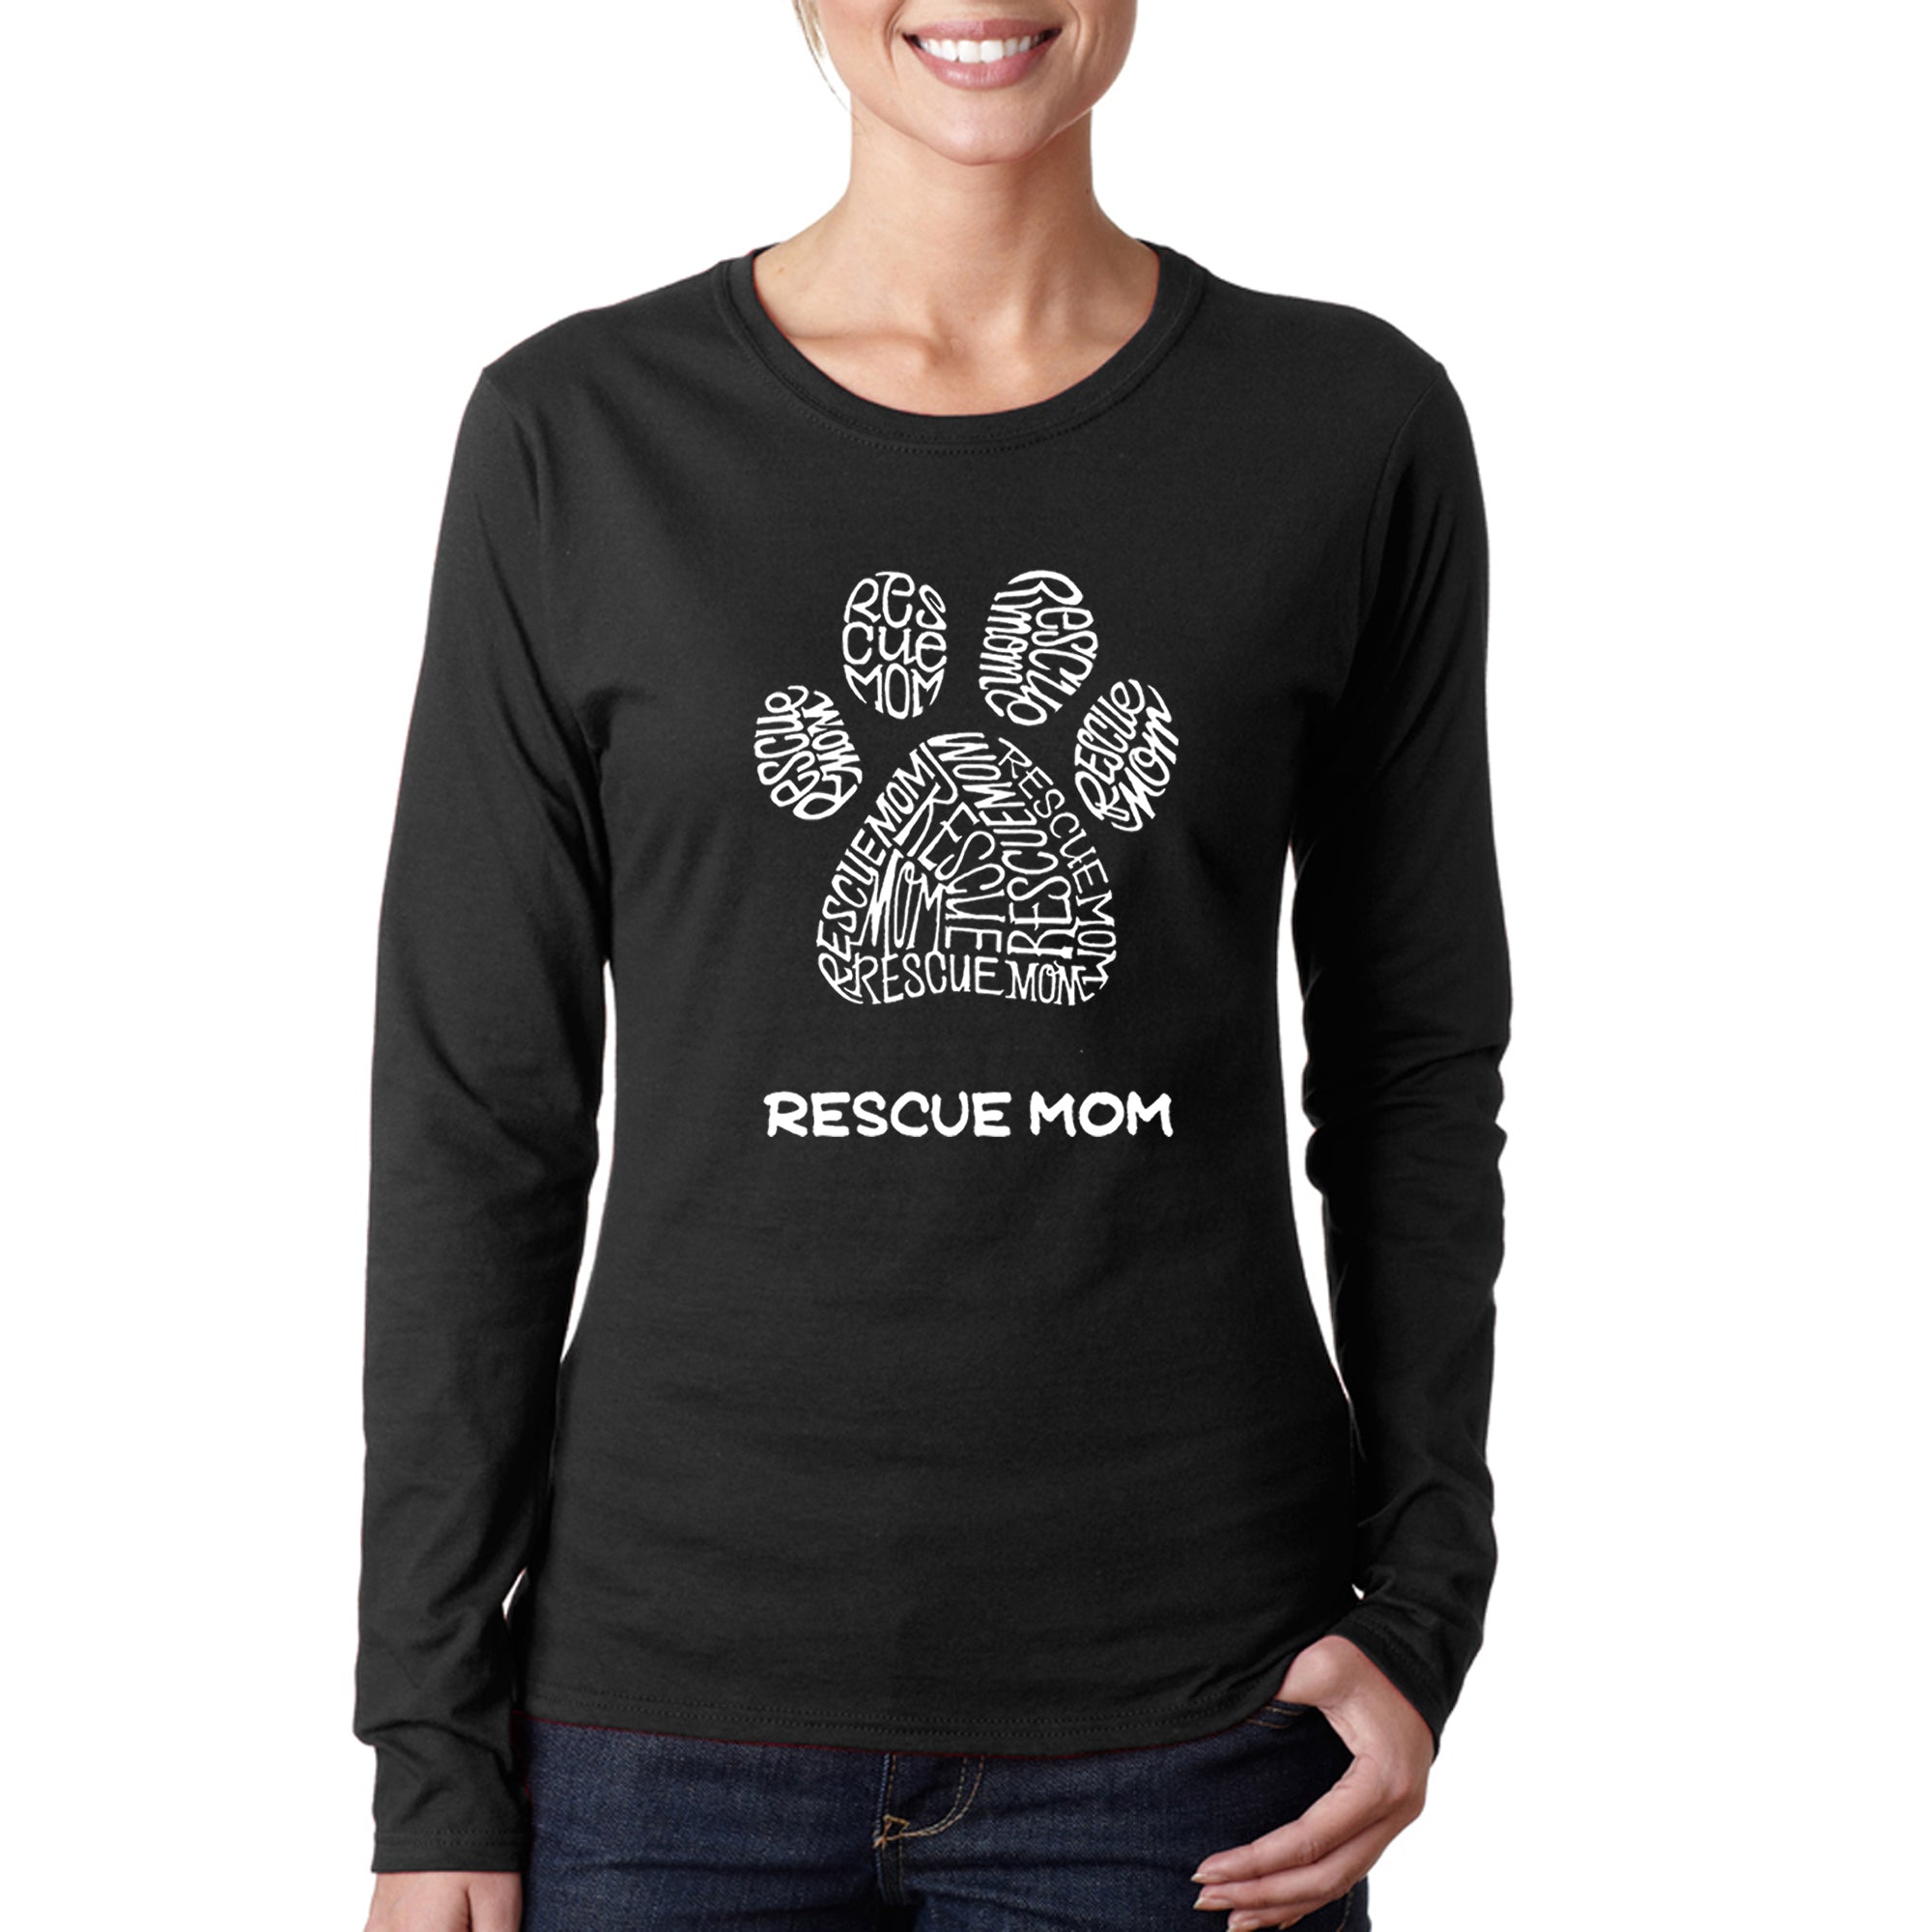 Rescue Mom - Women's Word Art Long Sleeve T-Shirt - Black - Large